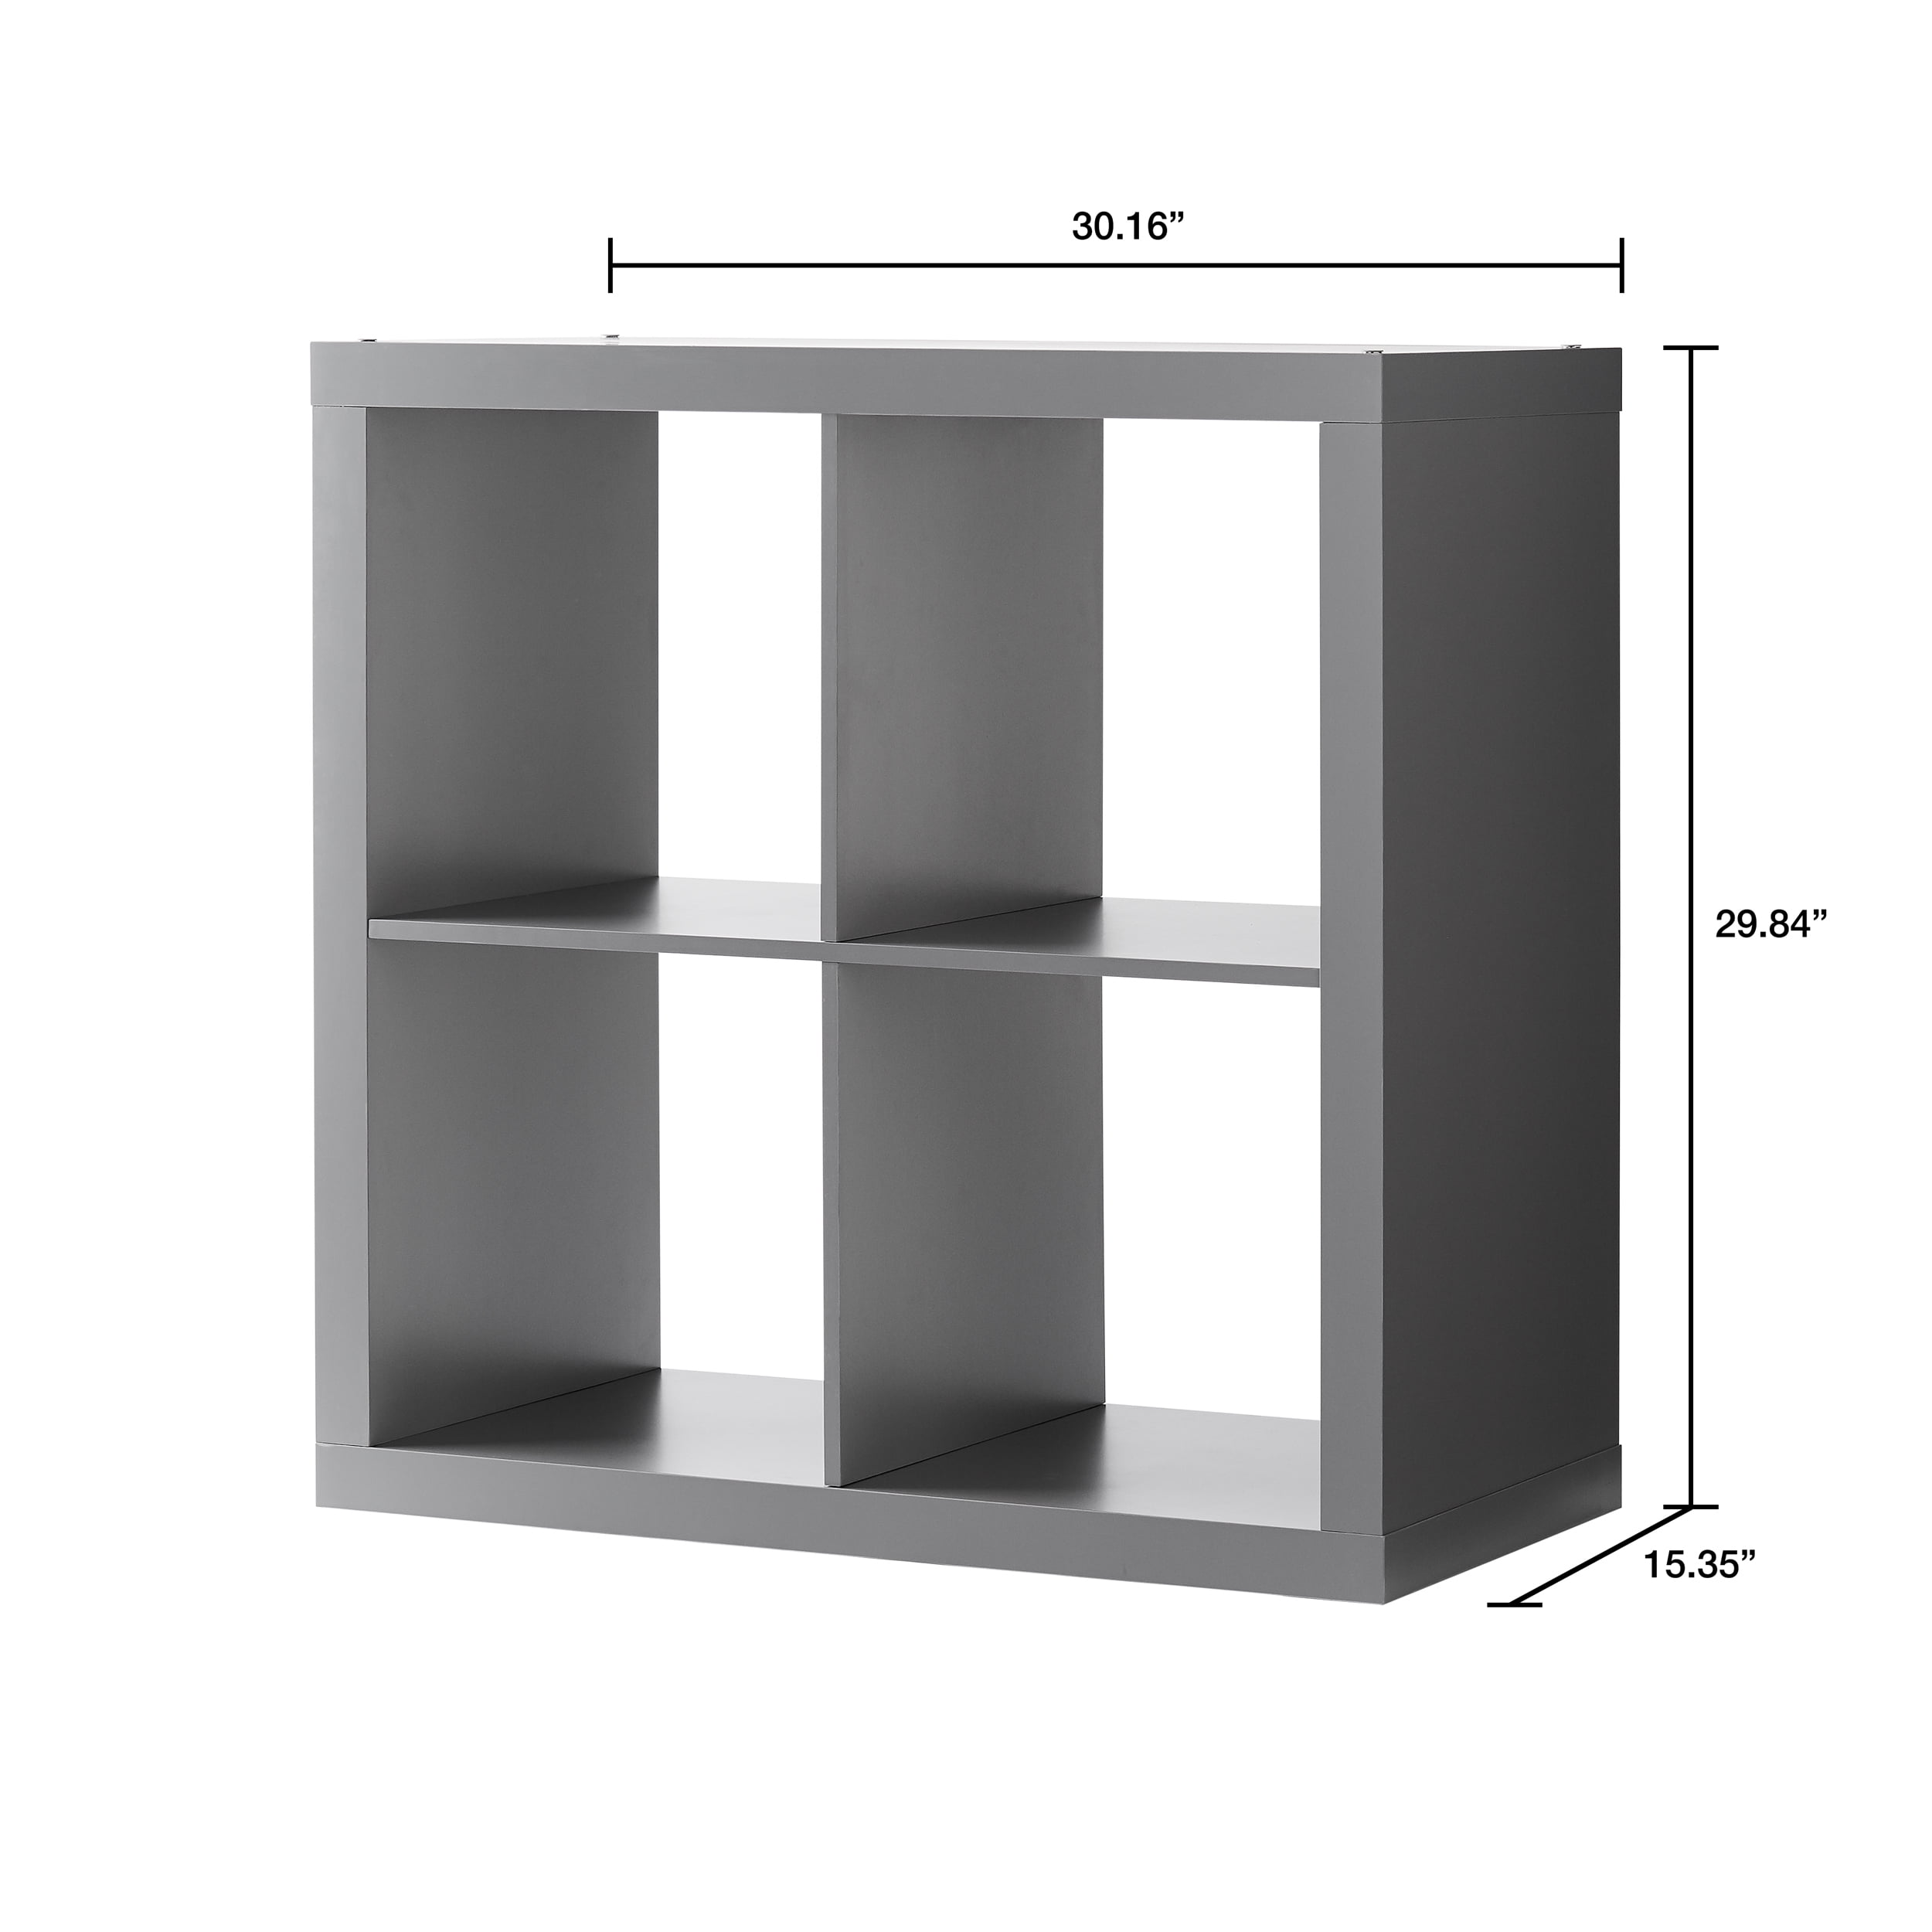 Better Homes & Gardens 4-Cube Storage Organizer, Gray - 2